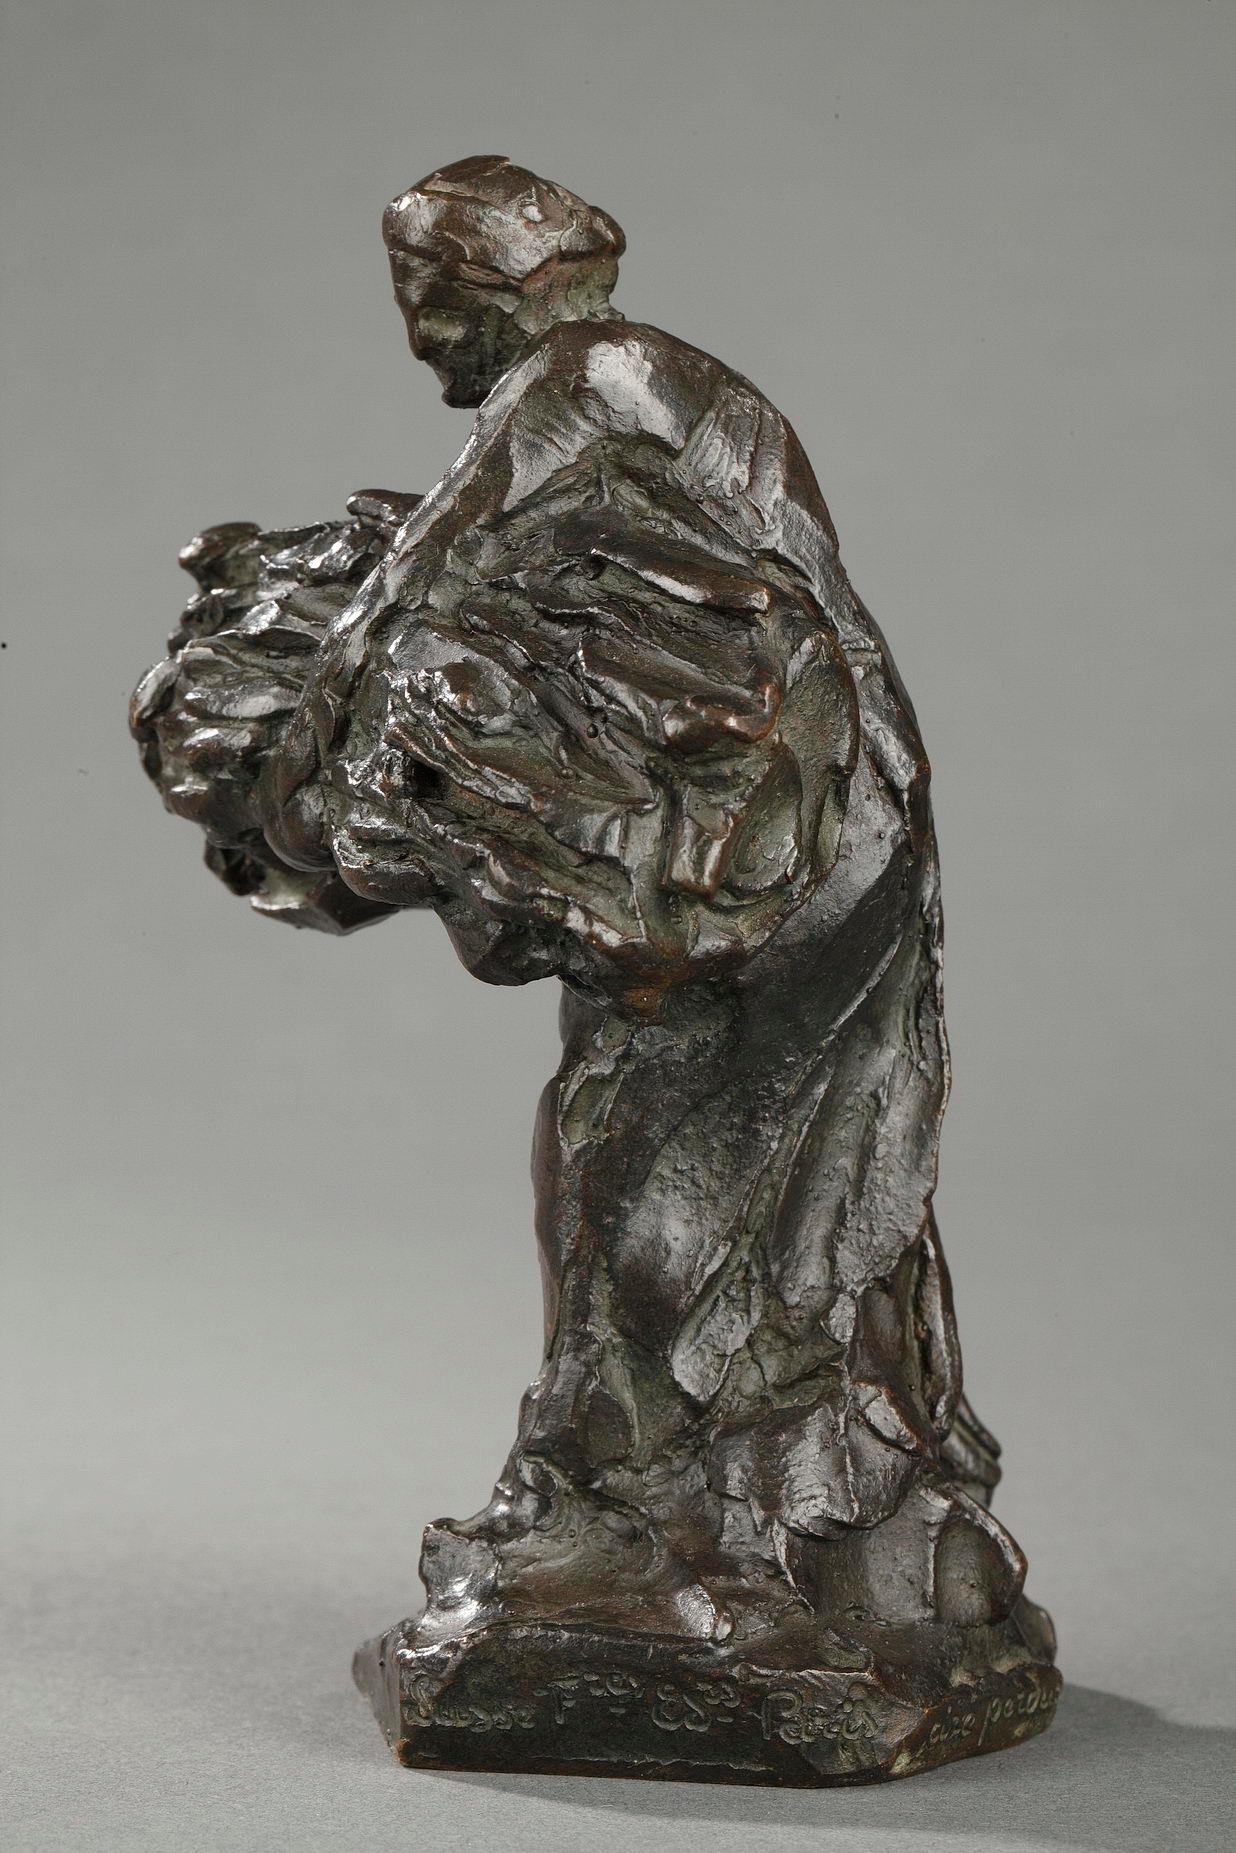 Träger von Weizengarben (Gold), Figurative Sculpture, von Aimé-Jules Dalou